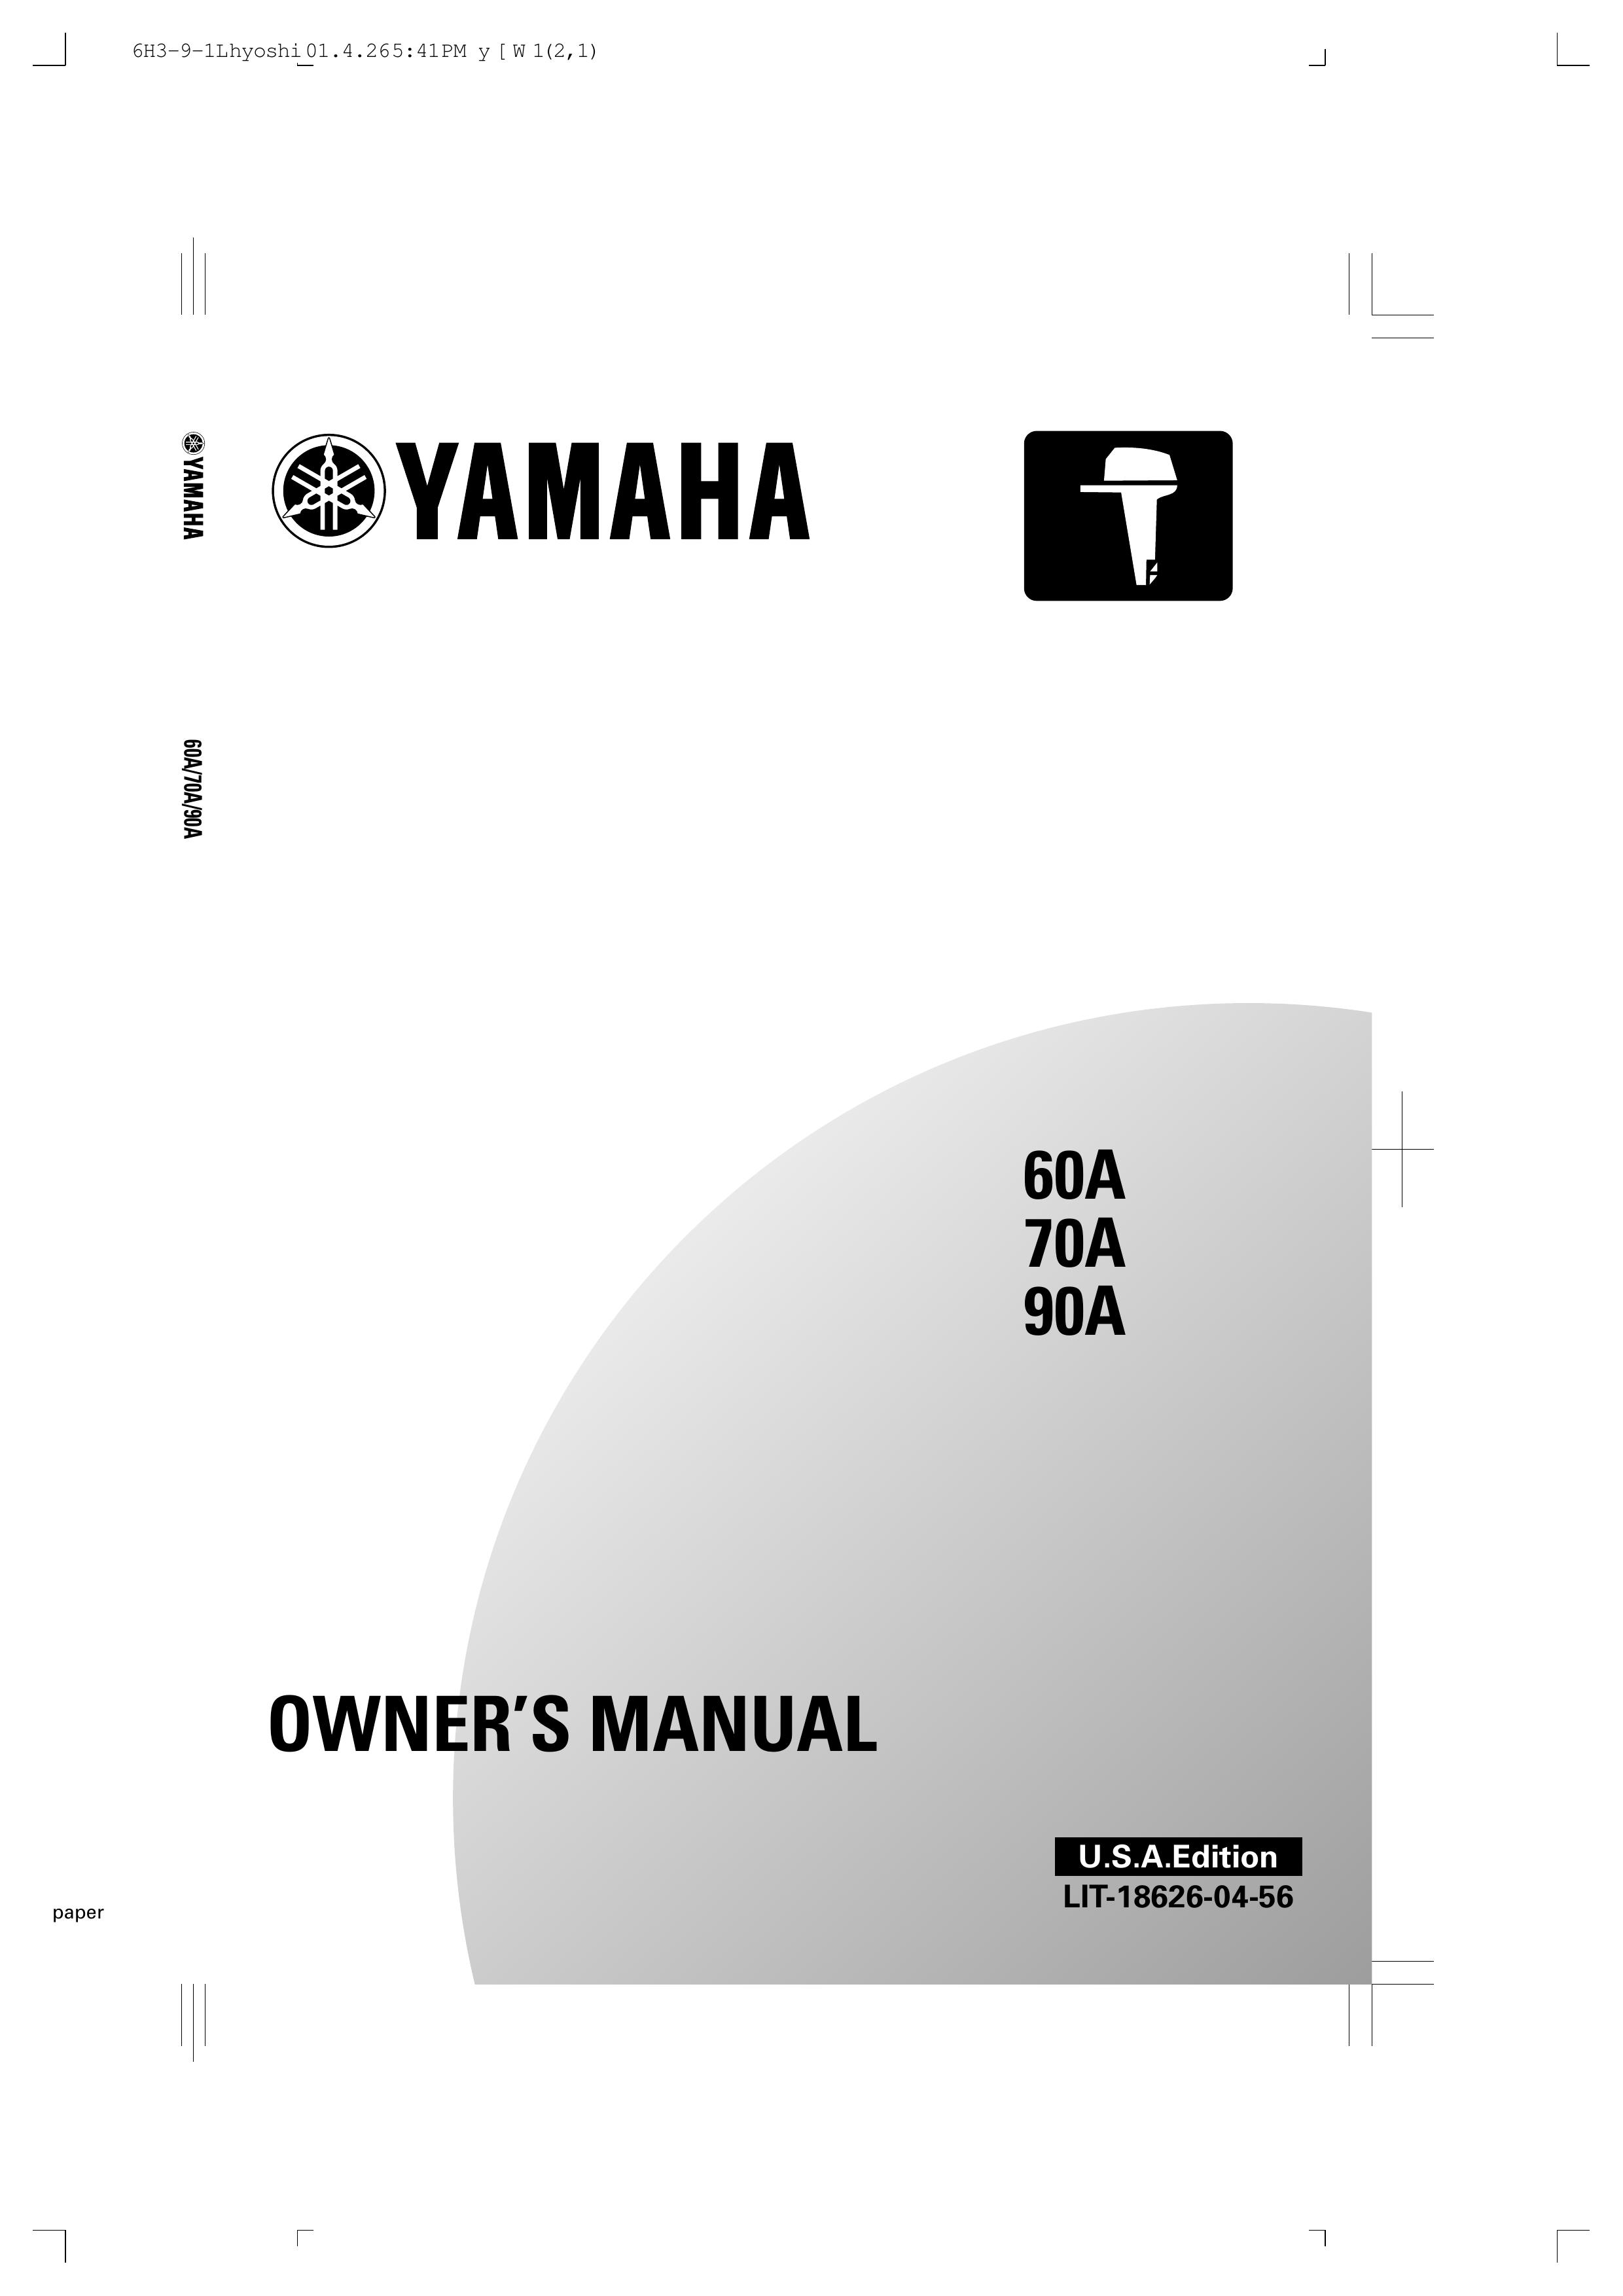 Yamaha 60A Outboard Motor User Manual